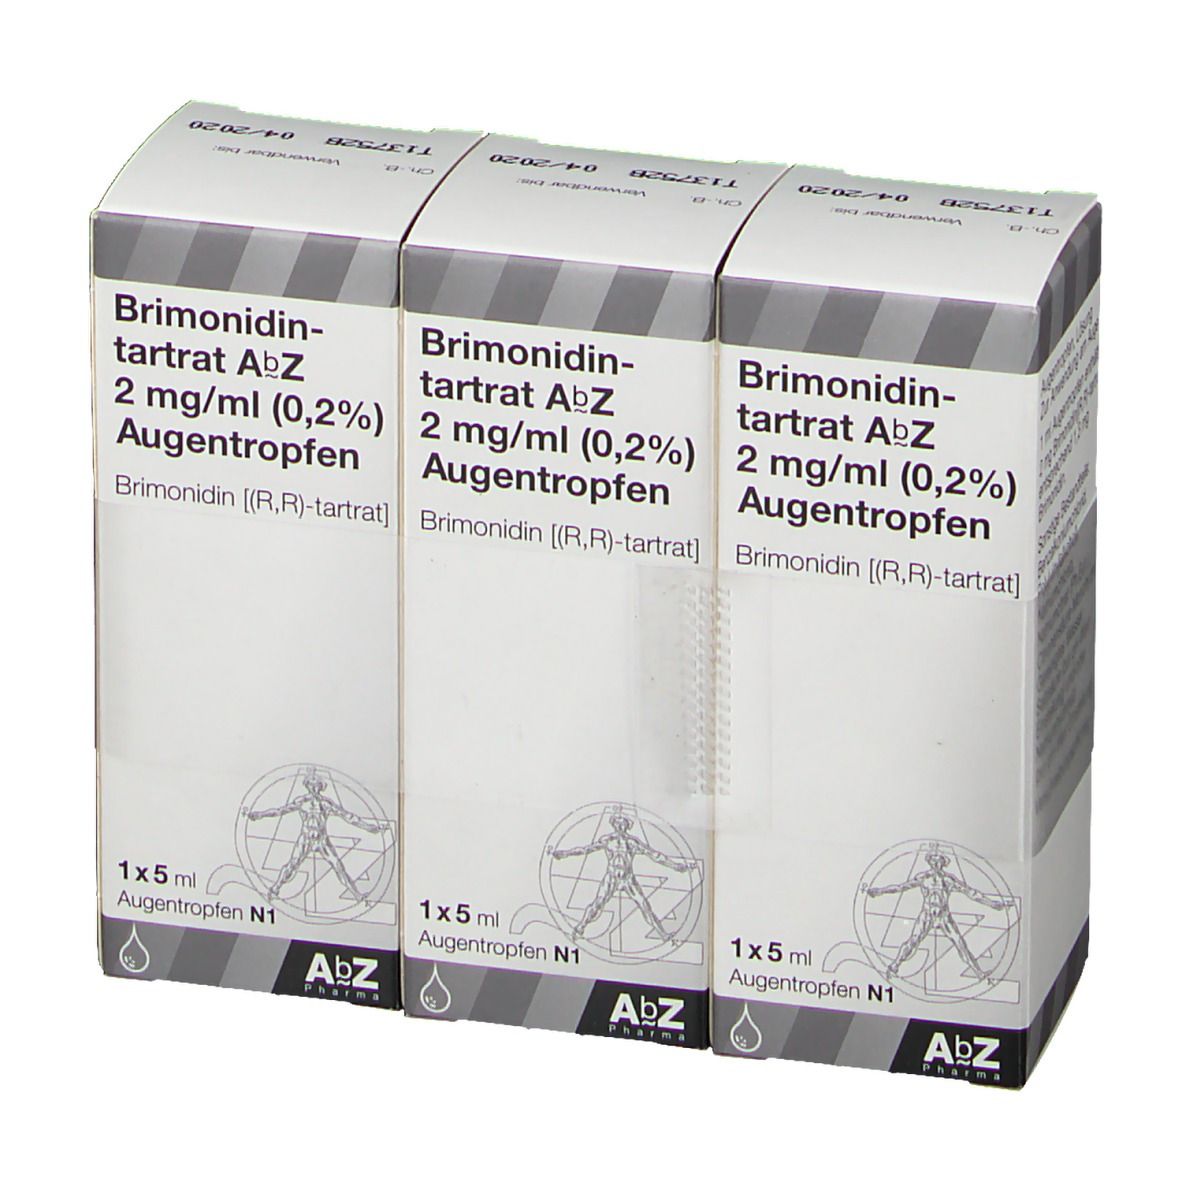 Brimonidintartrat AbZ 2 mg/ml 0,2%